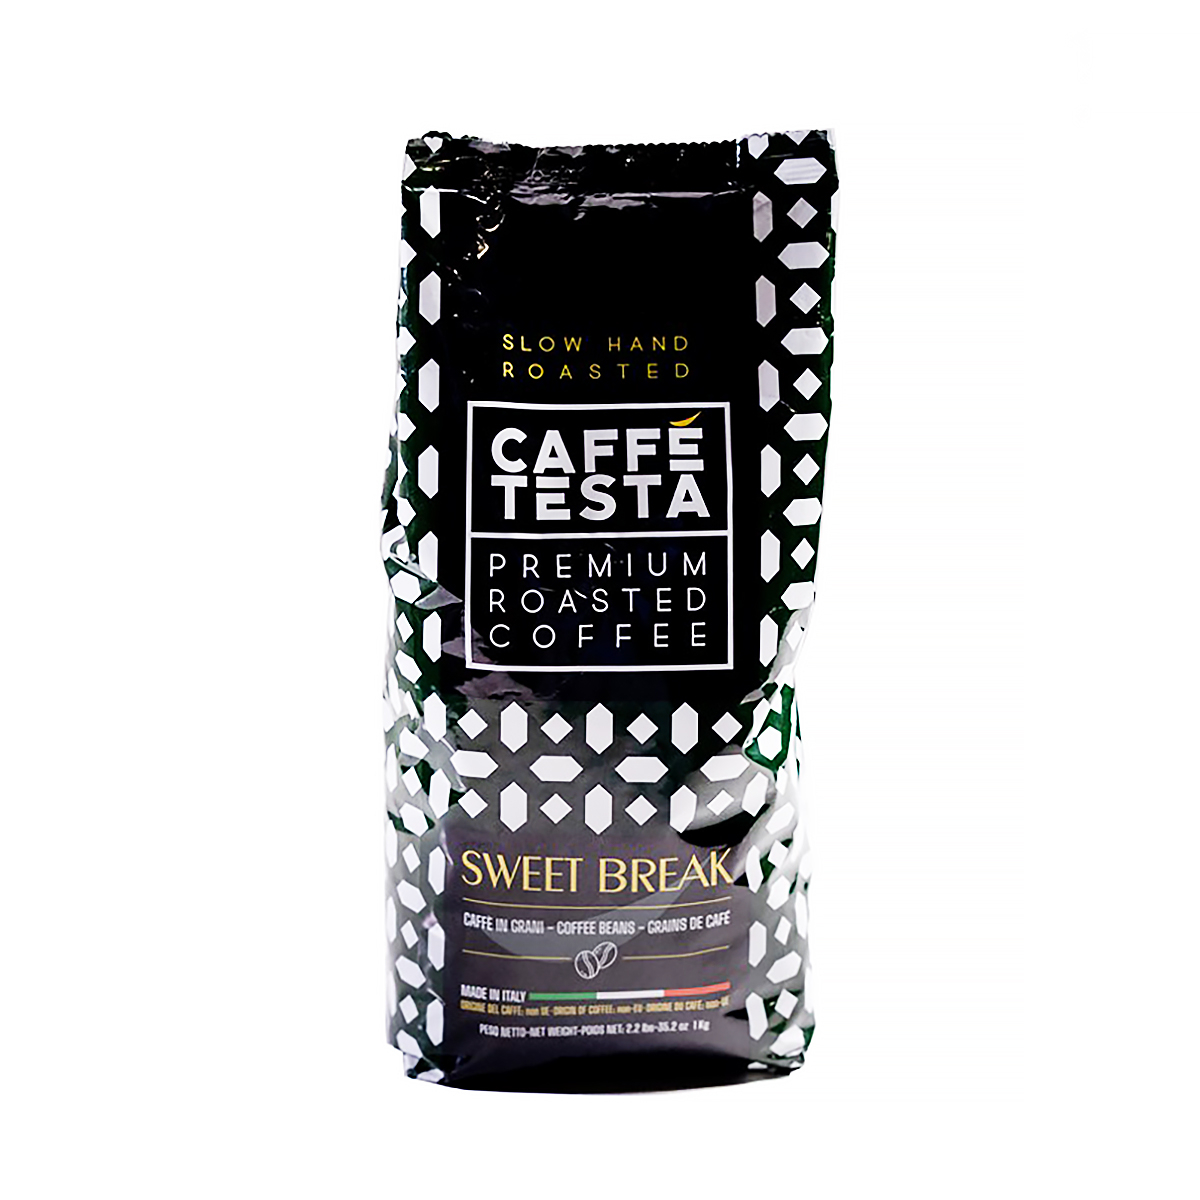 Кофе в зернах Caffe Testa Sweet Break, 1 кг